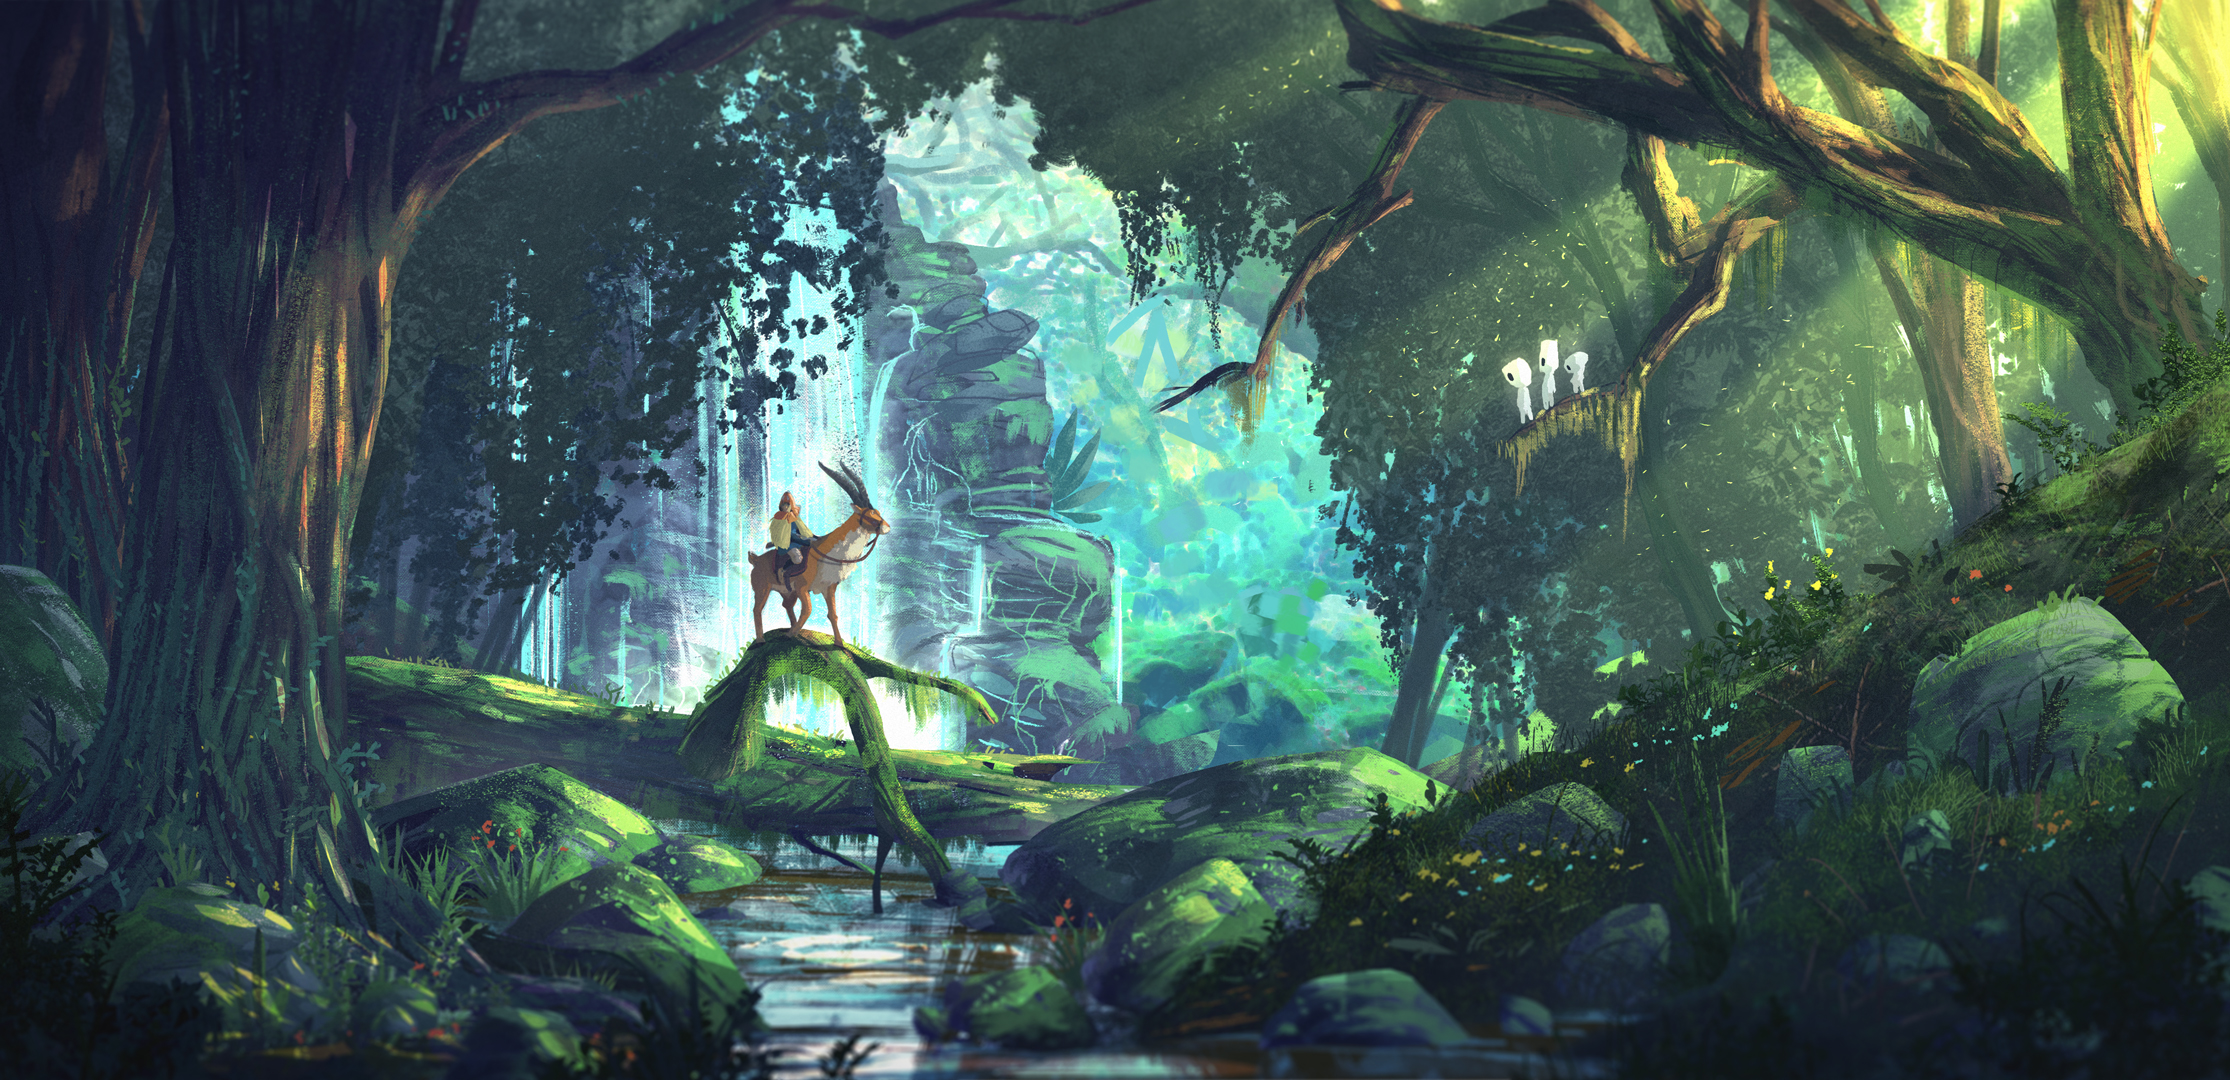 Princess Mononoke Painted Forest Wallpaper High Res